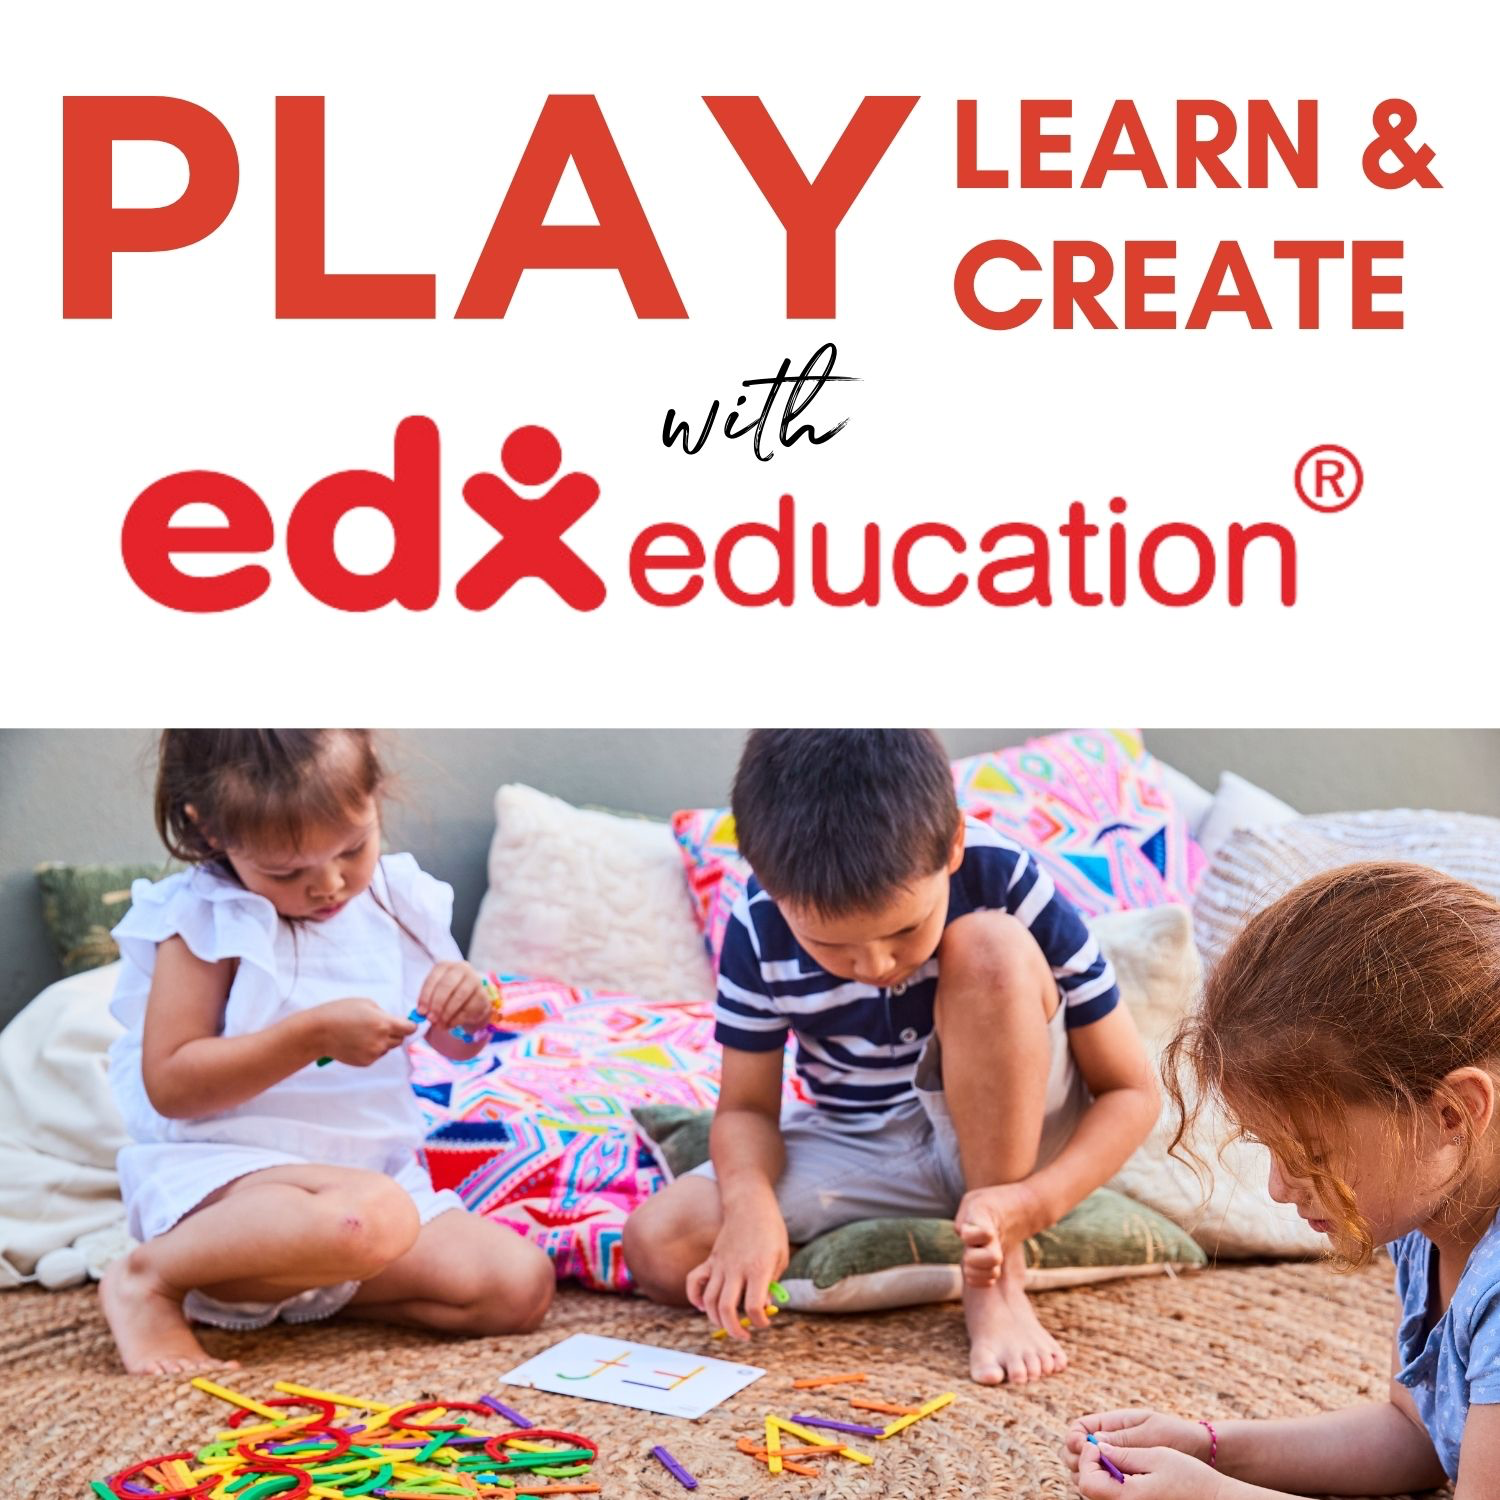 Play, Learn & Create with Edx Education...